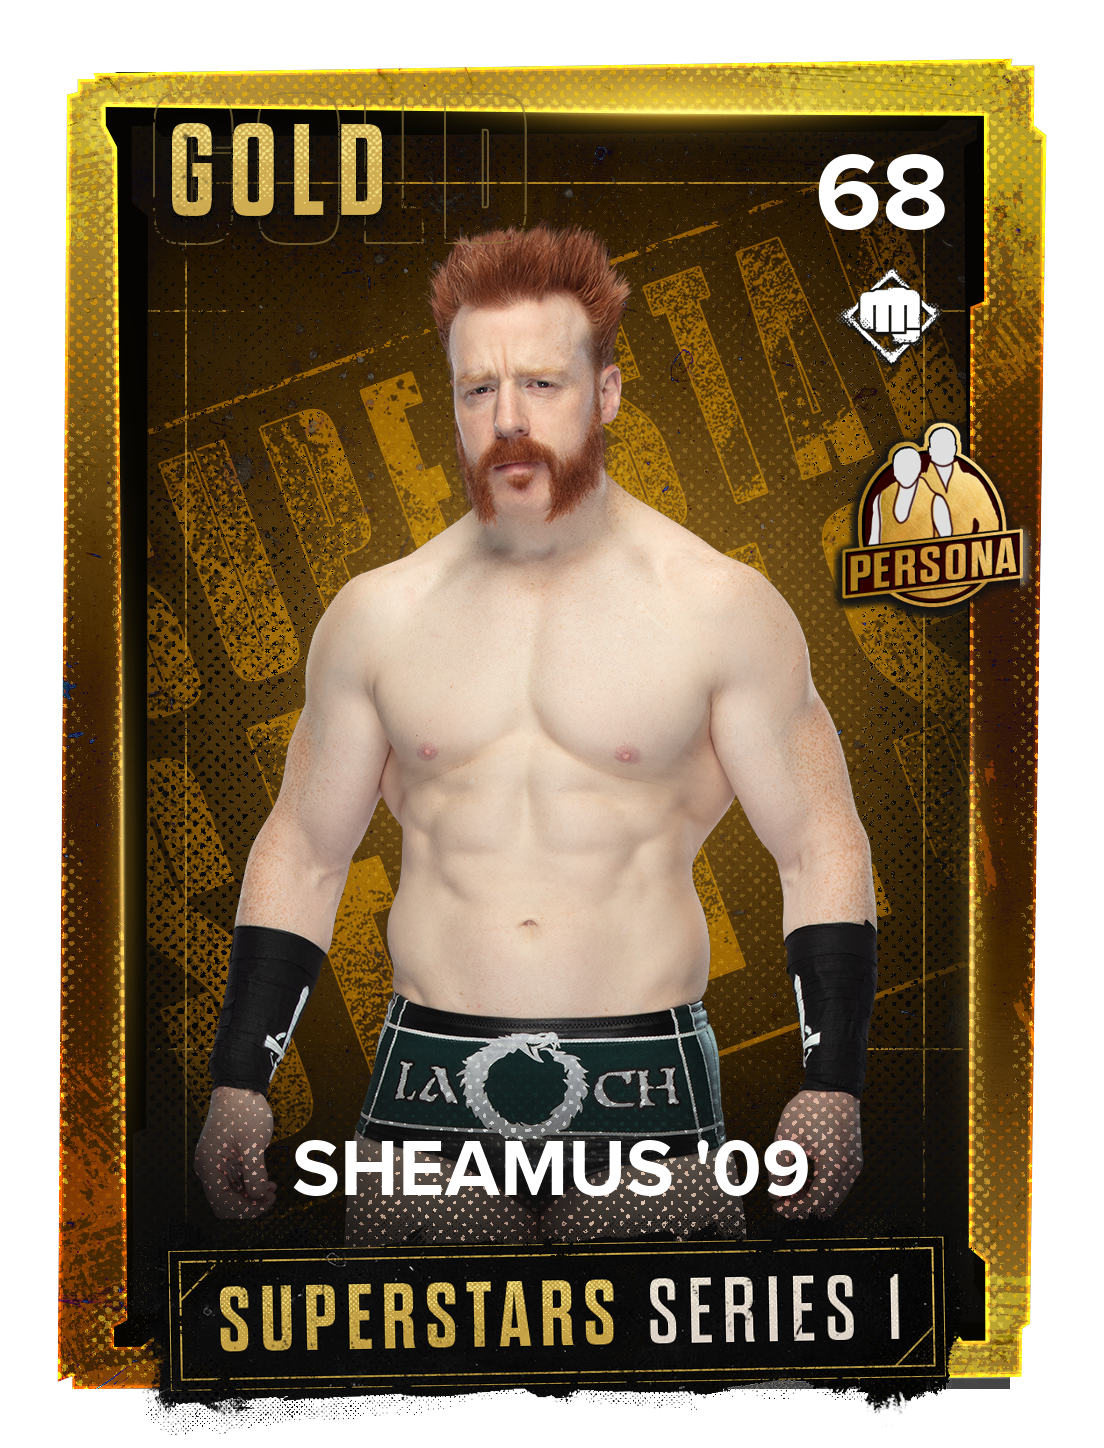 Sheamus Gold superstar series 1 000